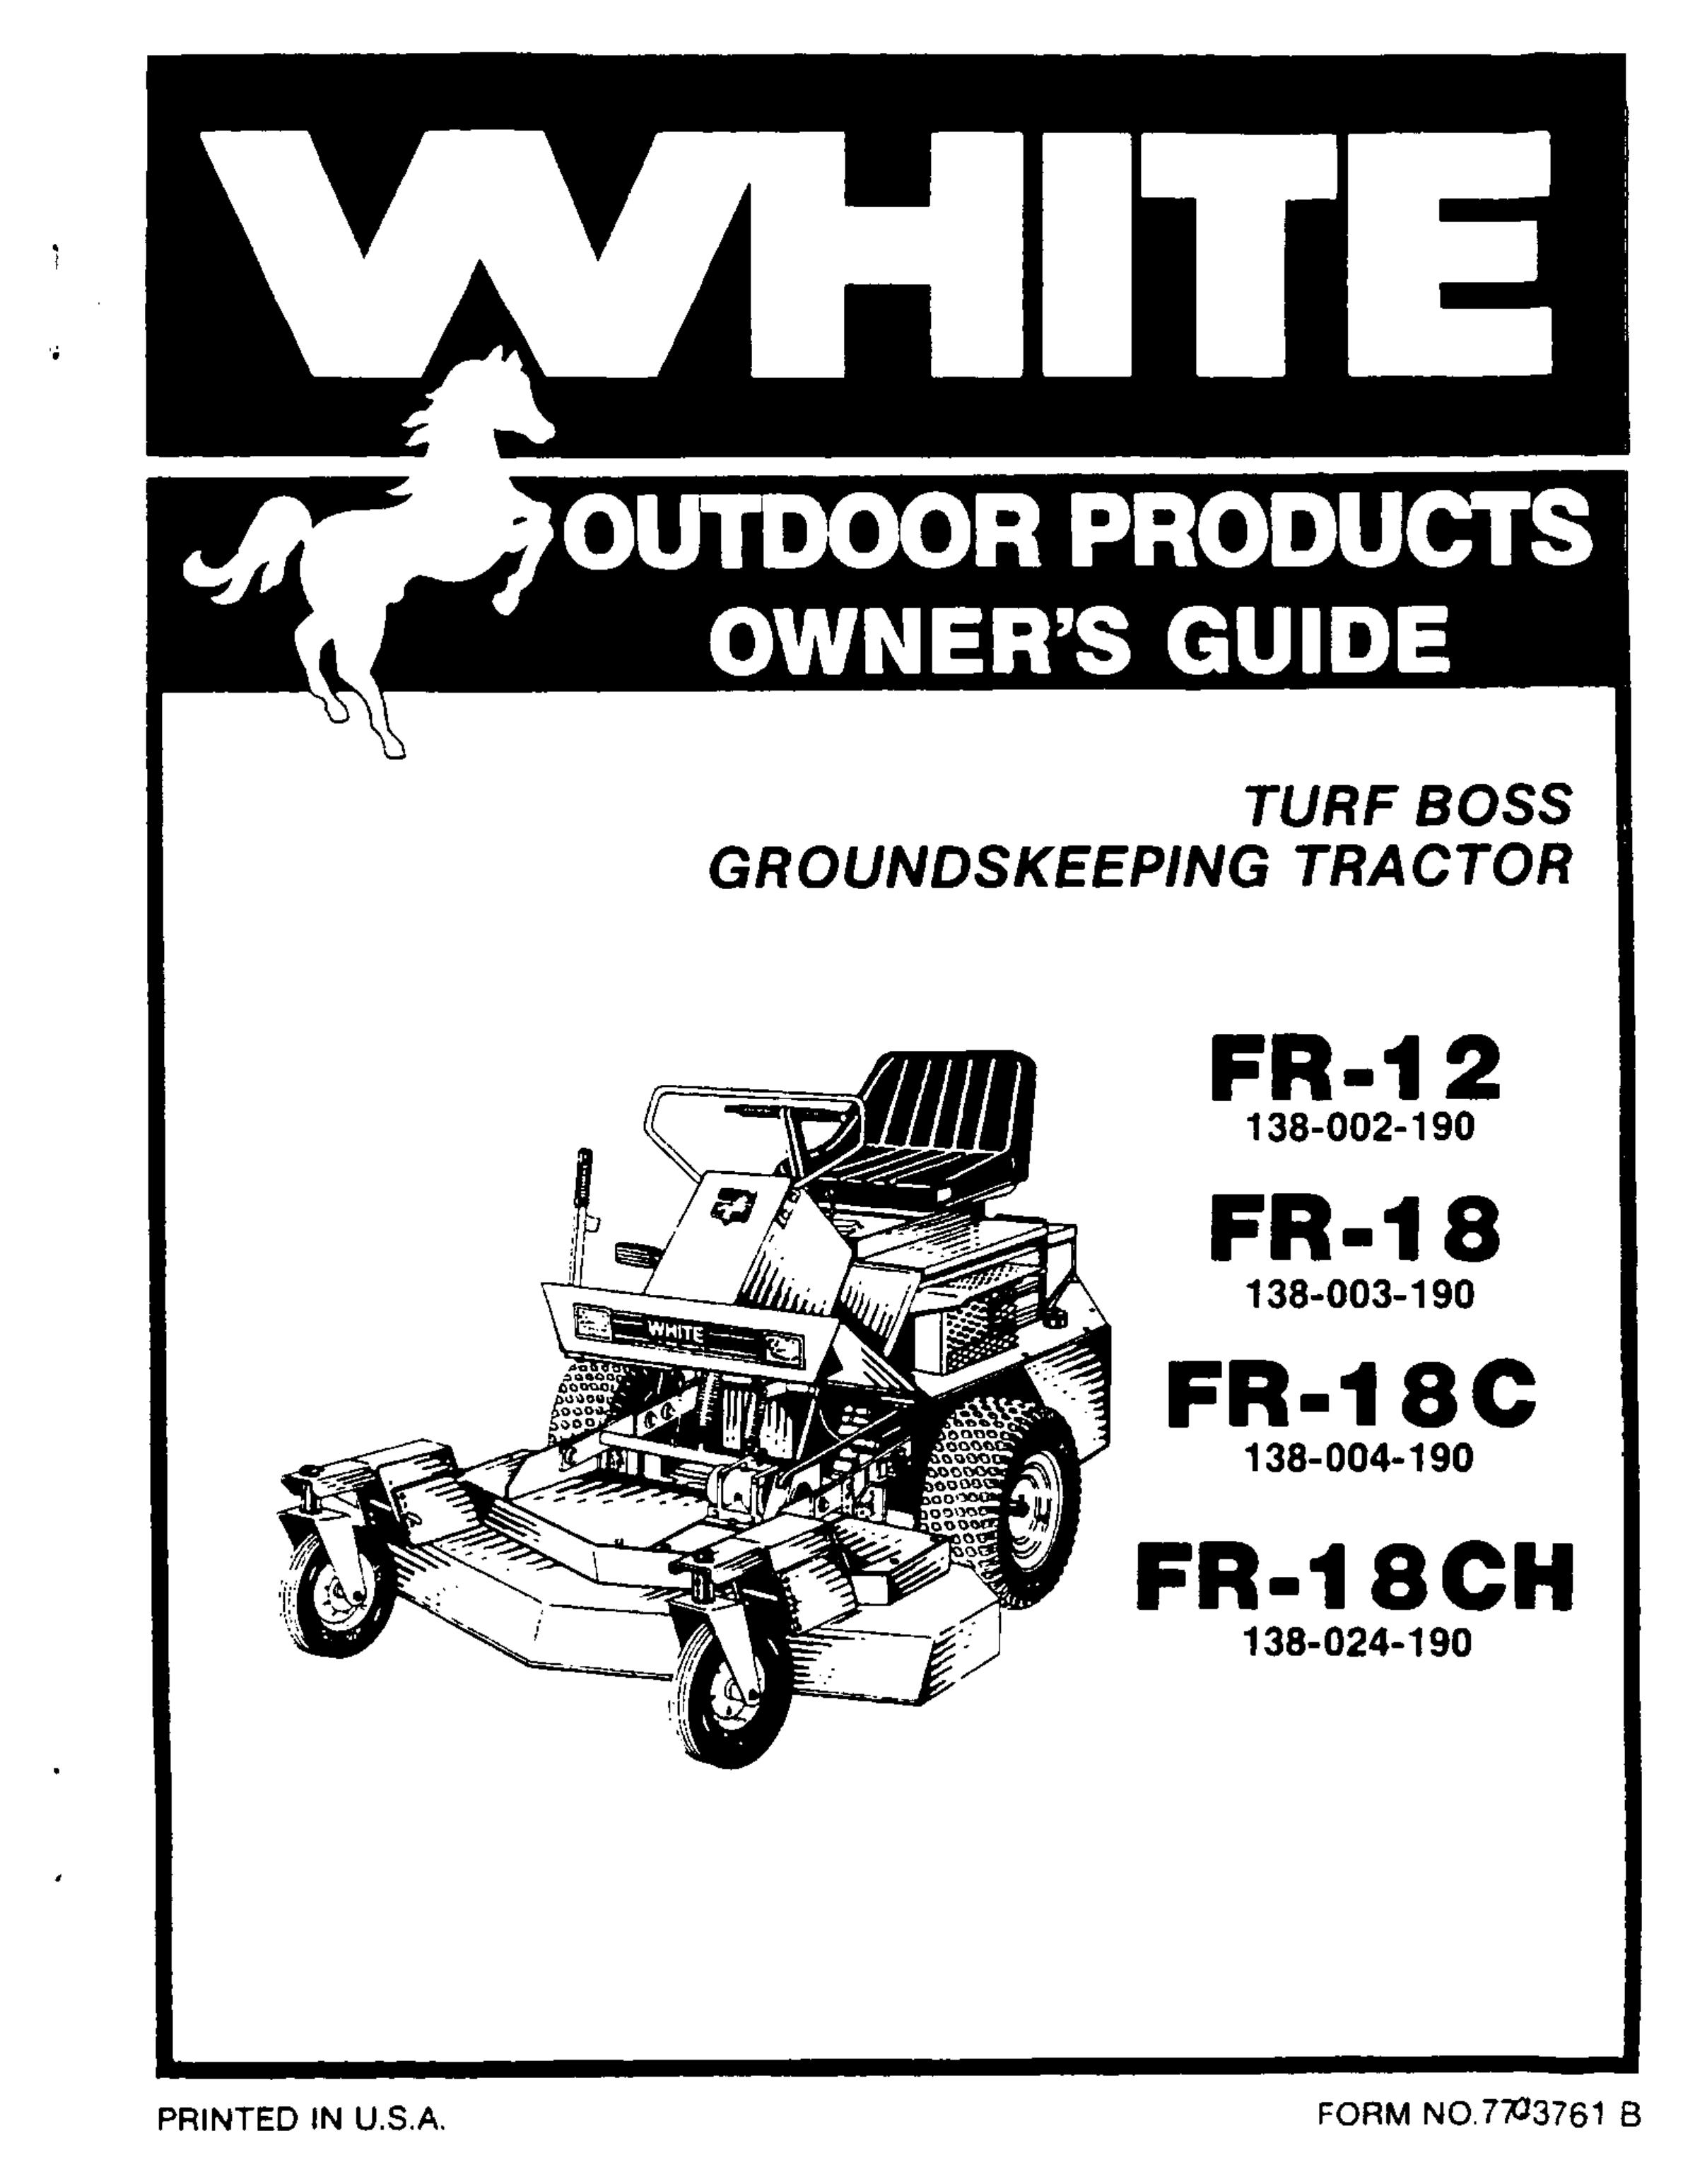 White FR18C Lawn Mower User Manual